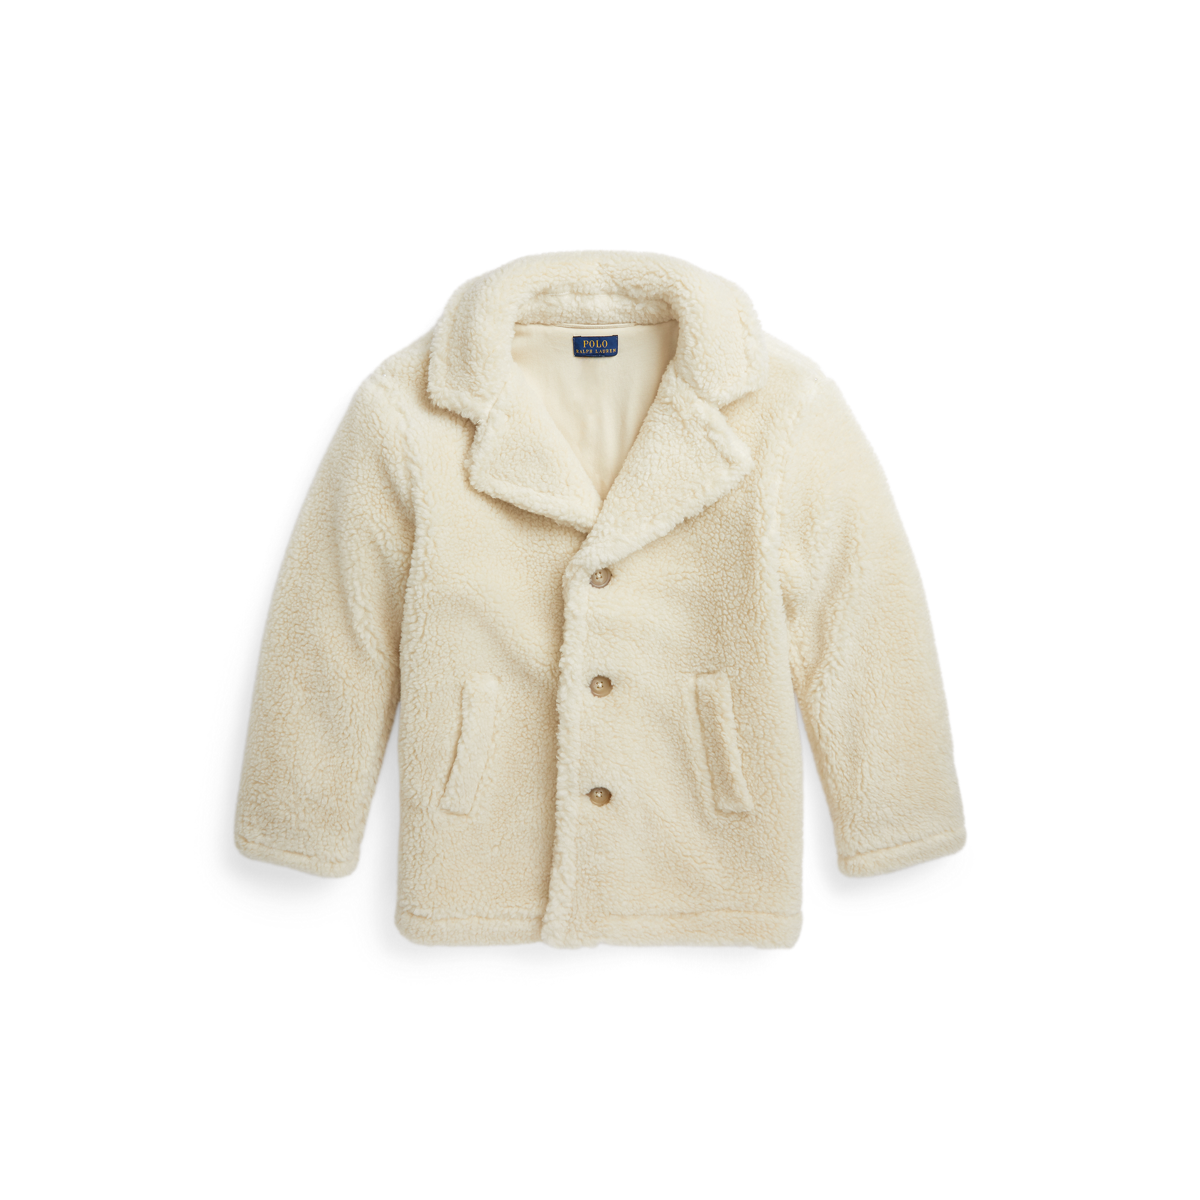 Polo Ralph Lauren Unisex white Teddy Fleece Jacket size M 10-12